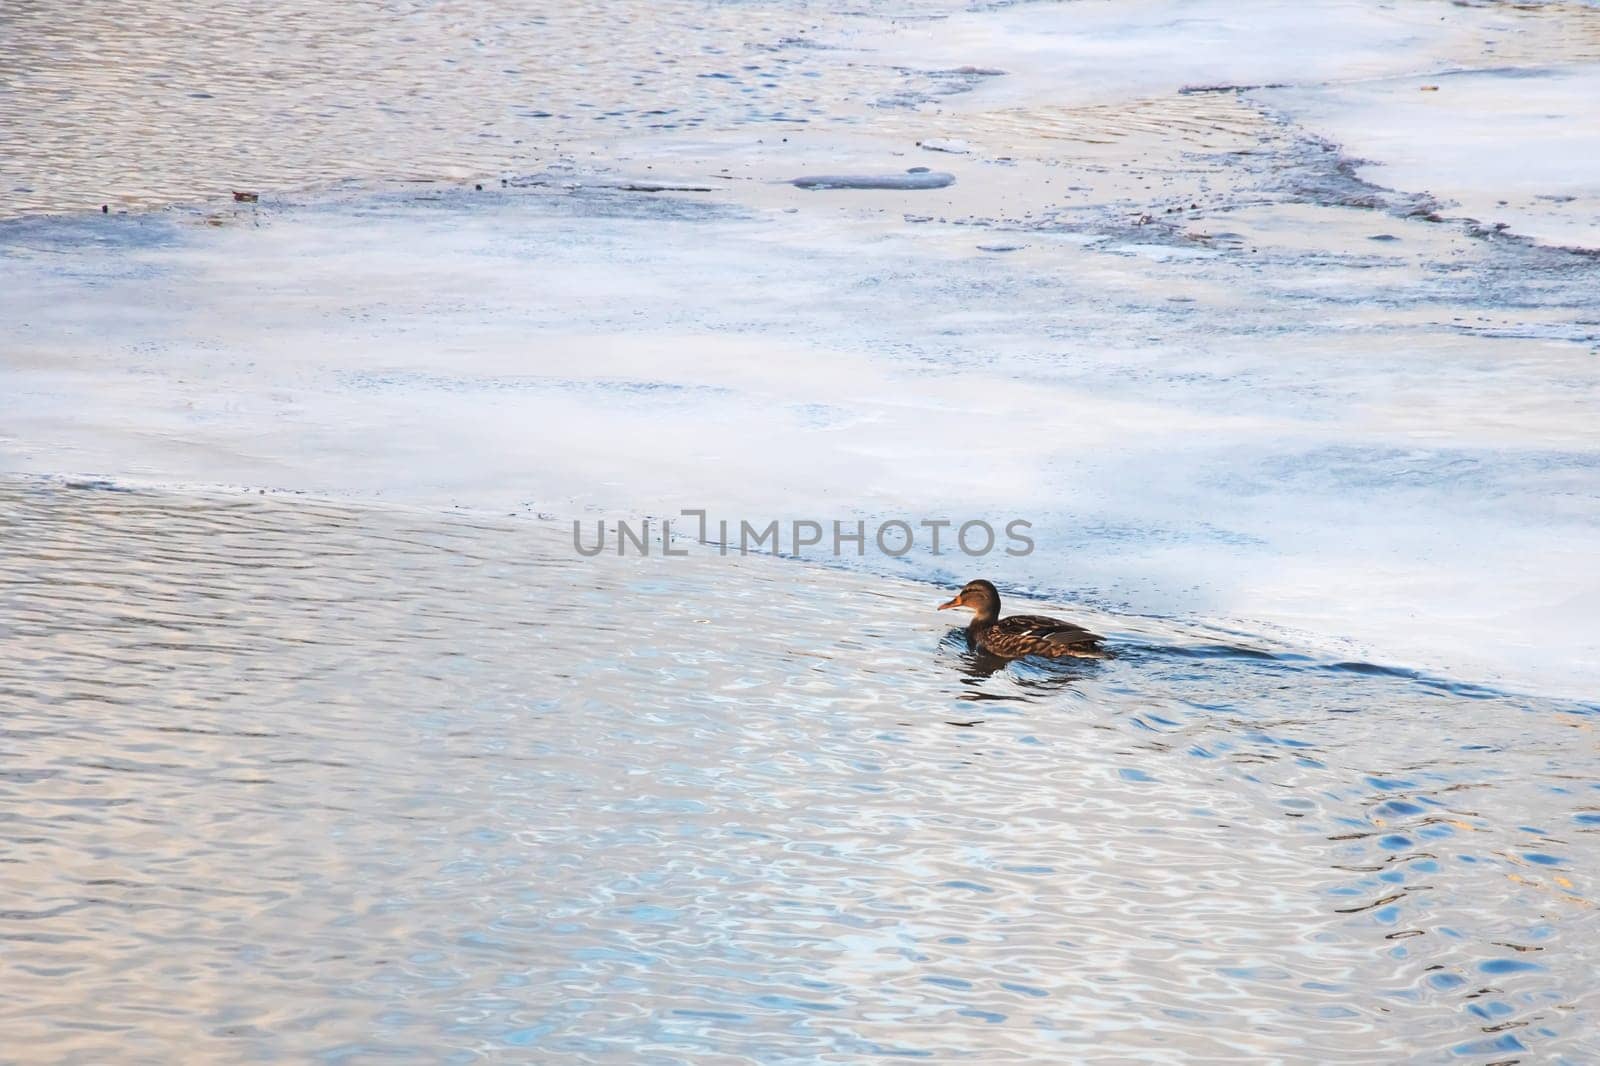 Ducks swim on water next to ice floe by Vera1703